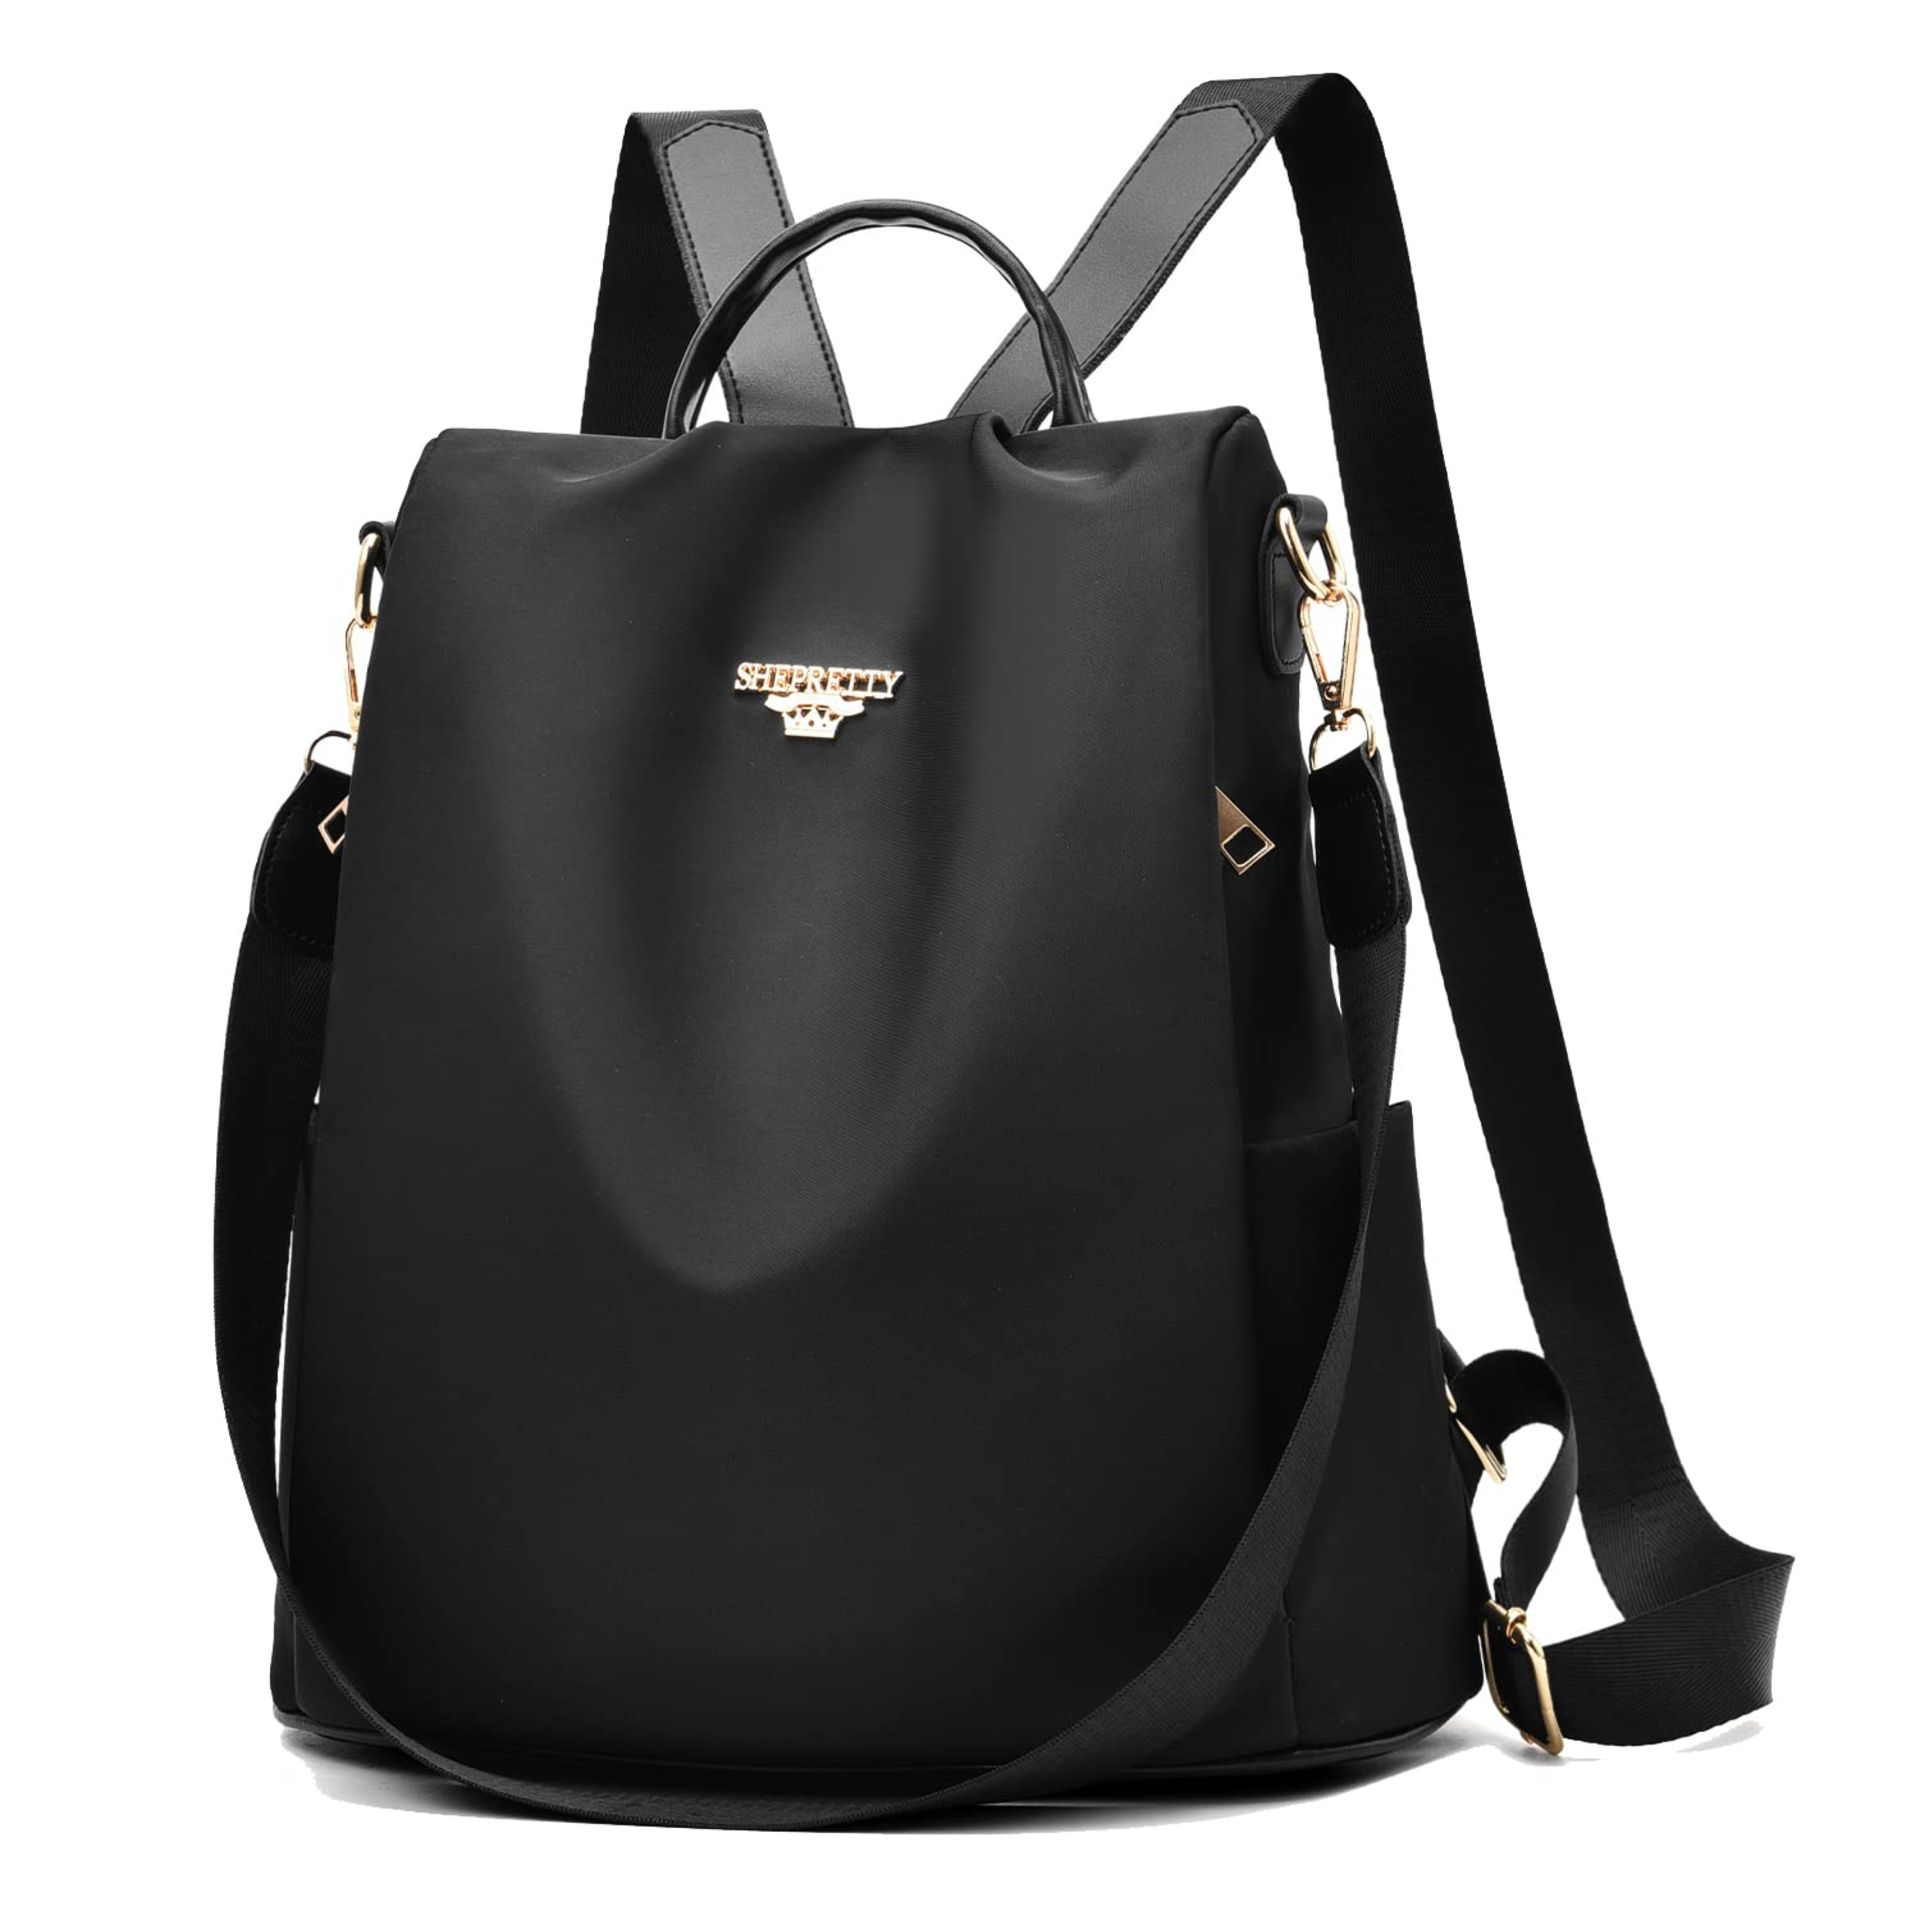 RRP £24.45 shepretty Backpacks Anti Theft Women Travel Rucksack Shoulder Bag,8888-d.